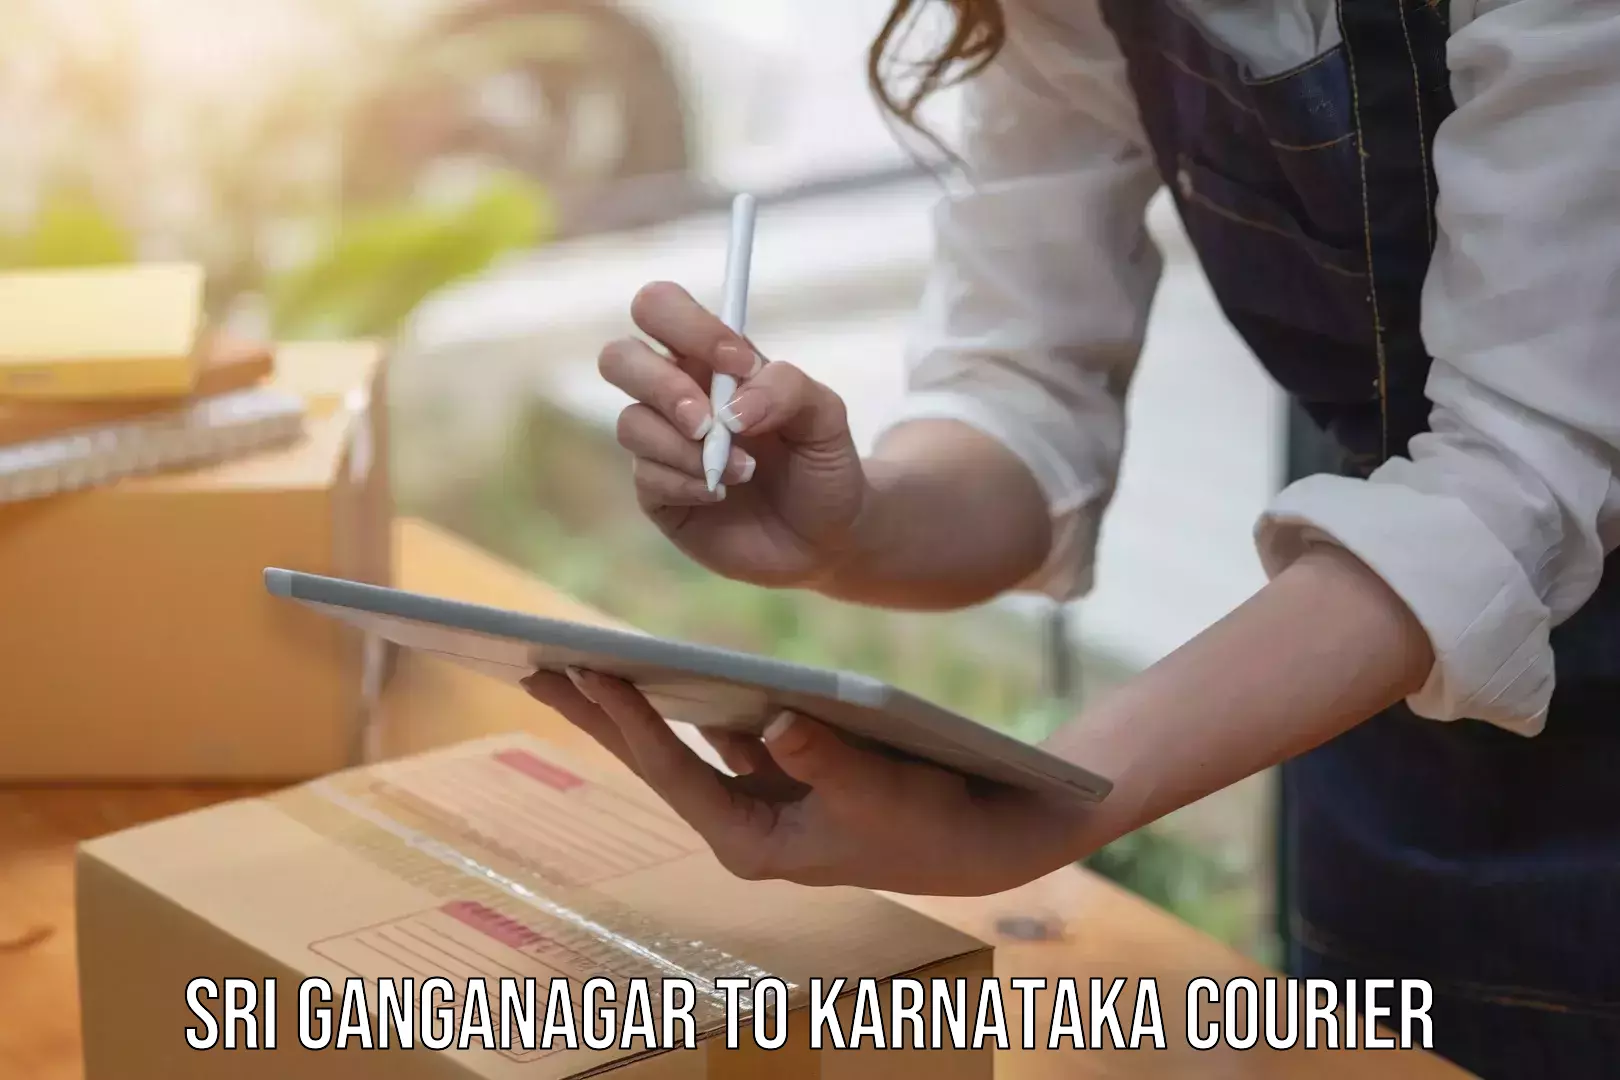 Courier service efficiency Sri Ganganagar to Karnataka